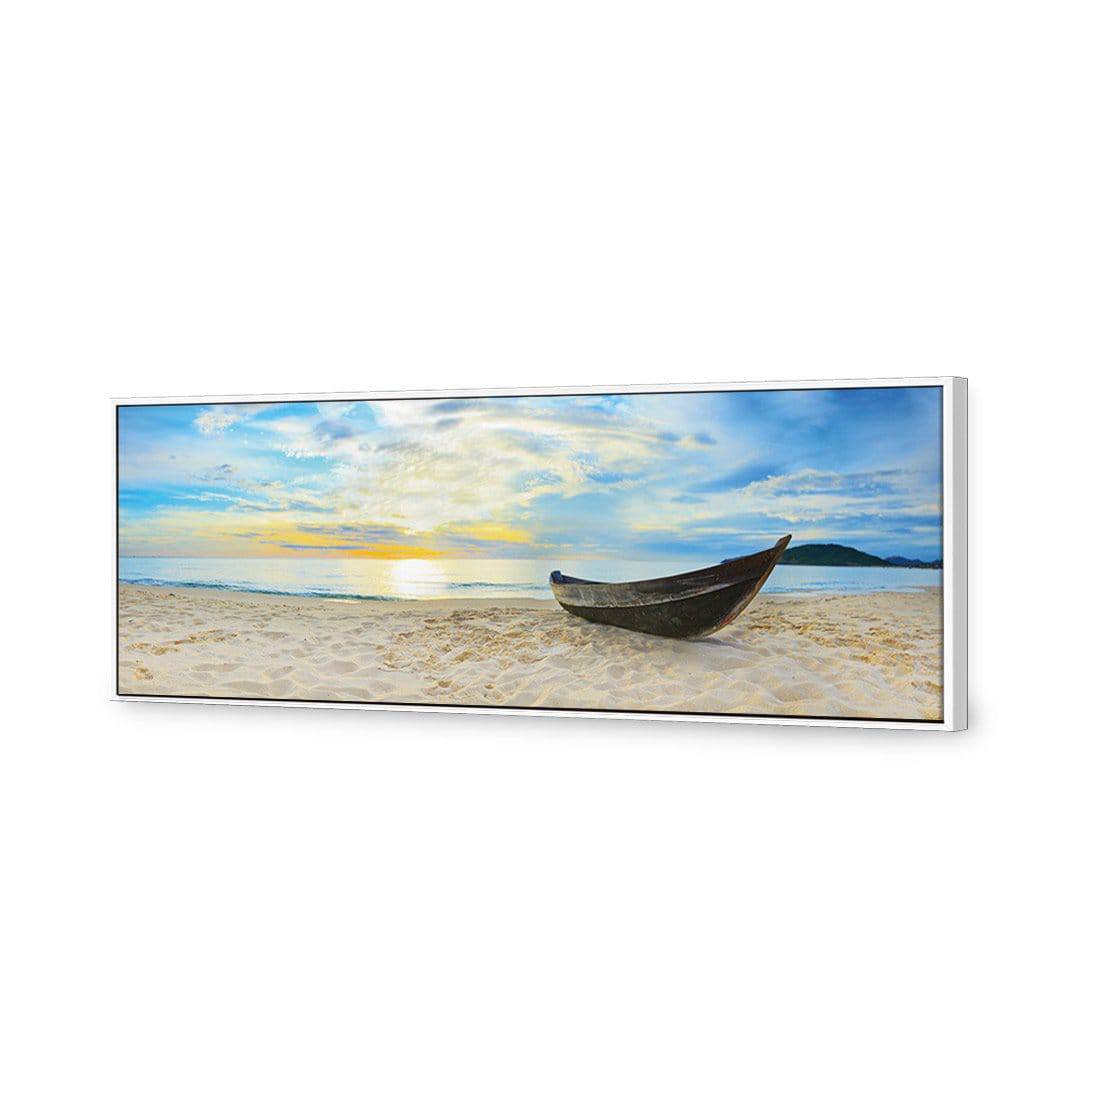 Finished Fishing Canvas Art-Canvas-Wall Art Designs-60x20cm-Canvas - White Frame-Wall Art Designs